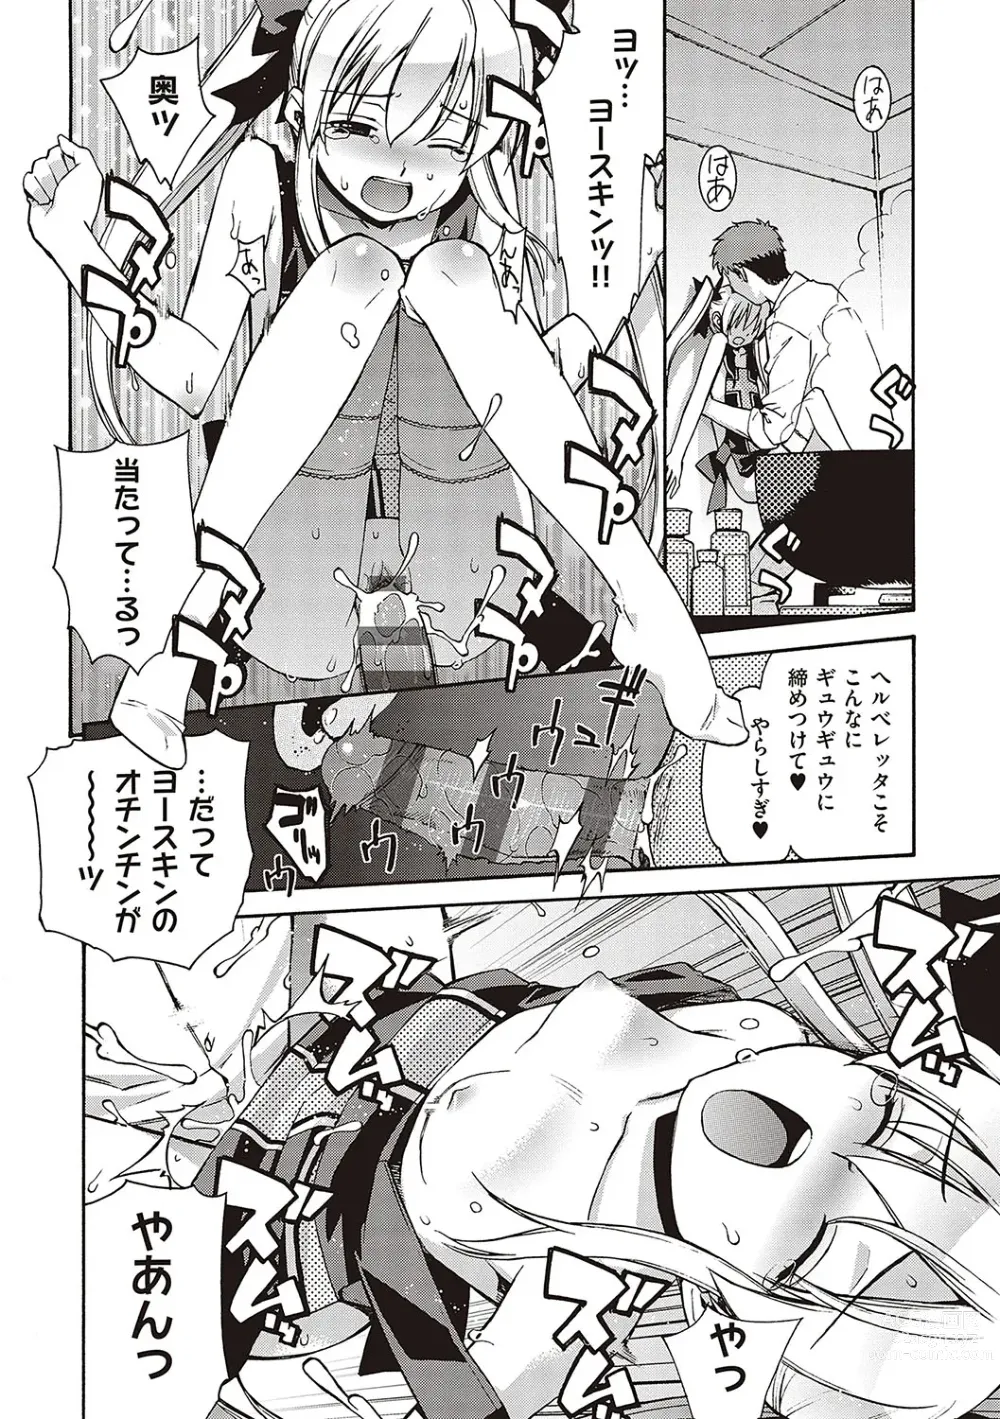 Page 239 of manga KOAKUMA DAISY